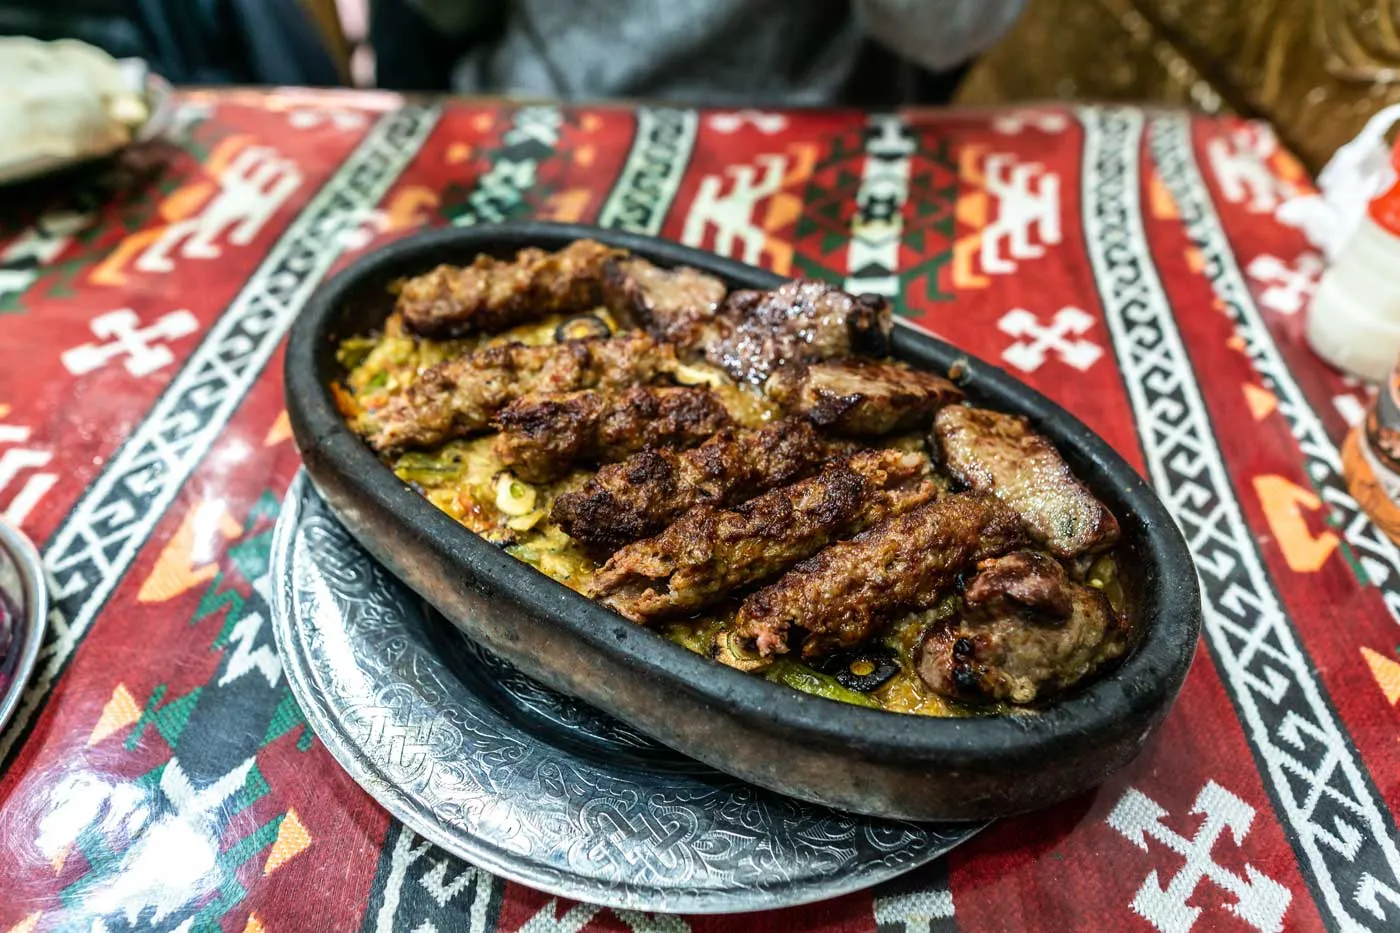 Comida turca chamada Veli Nasik do Restaurante Et-se Et Şükret